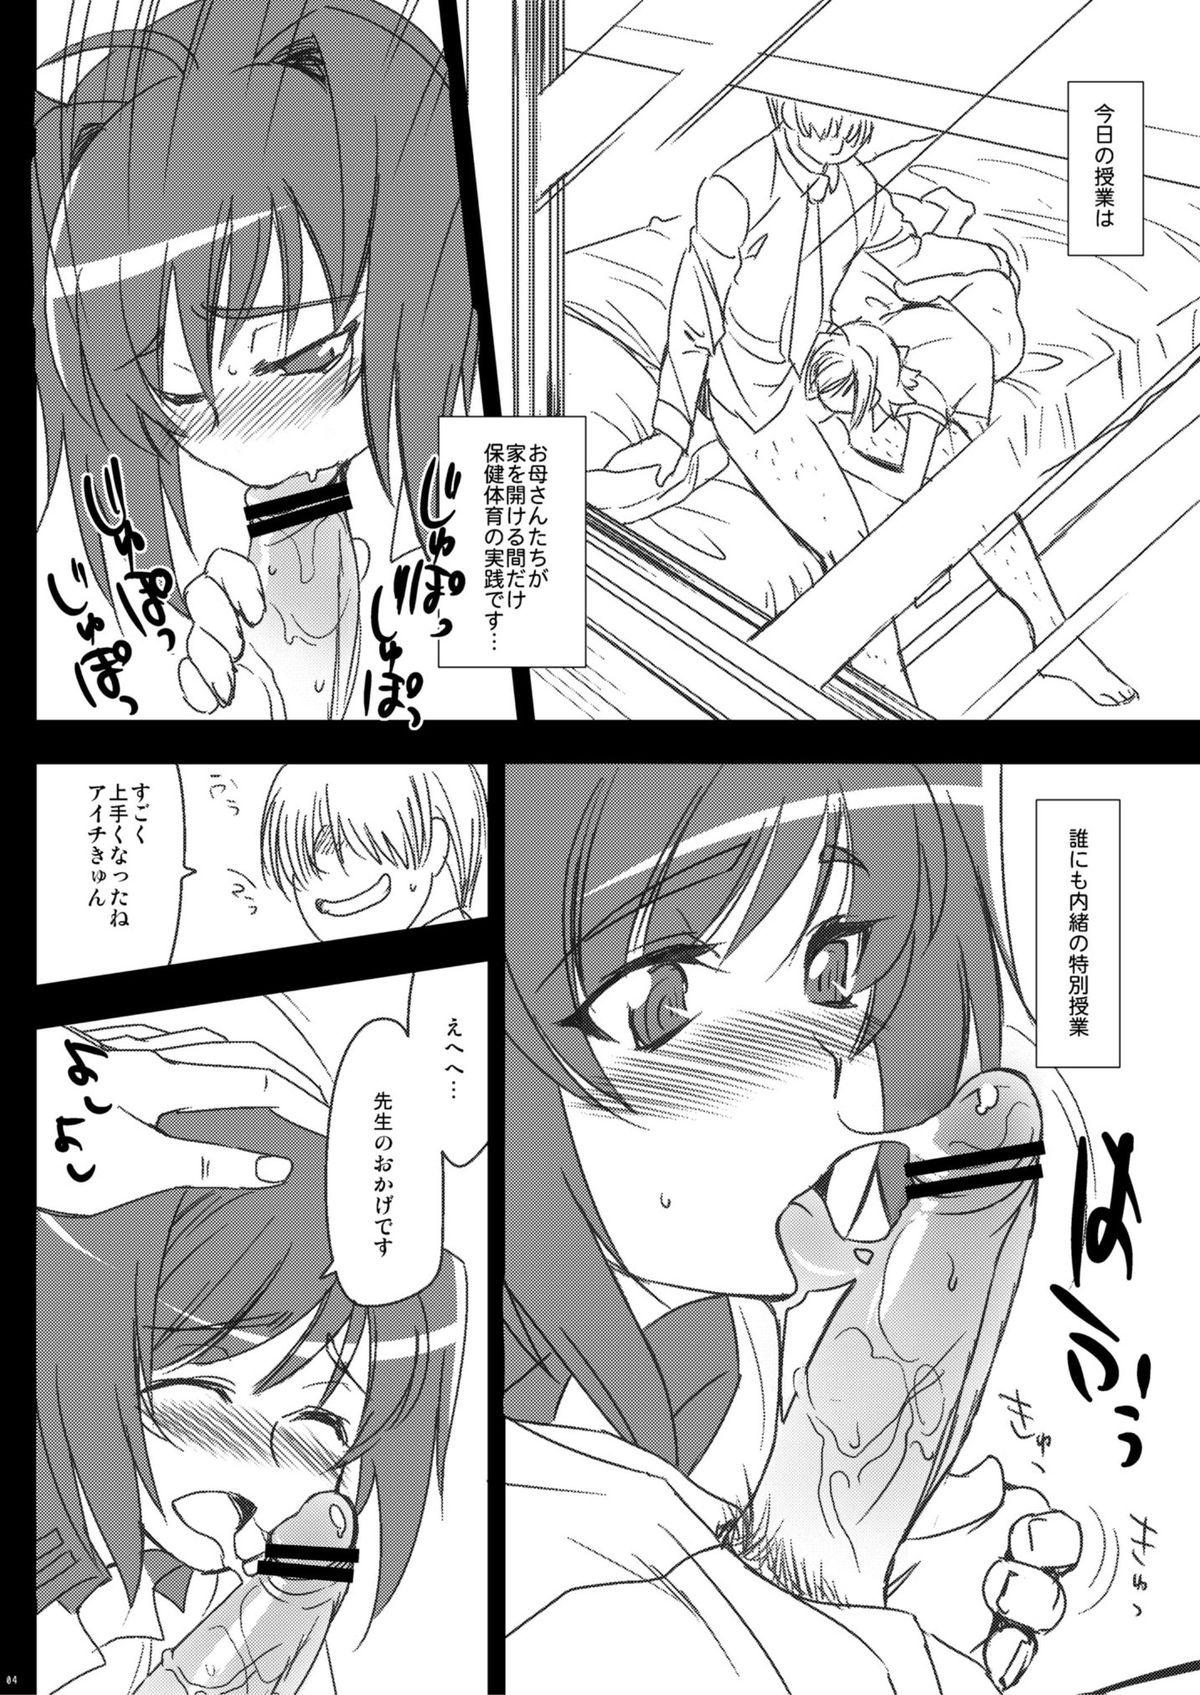 Ninfeta Tachikawa Negoro(kitsune)Tutor ride! Attack in Aichi!(Cardfight!! Vanguard) - Cardfight vanguard Jockstrap - Page 4